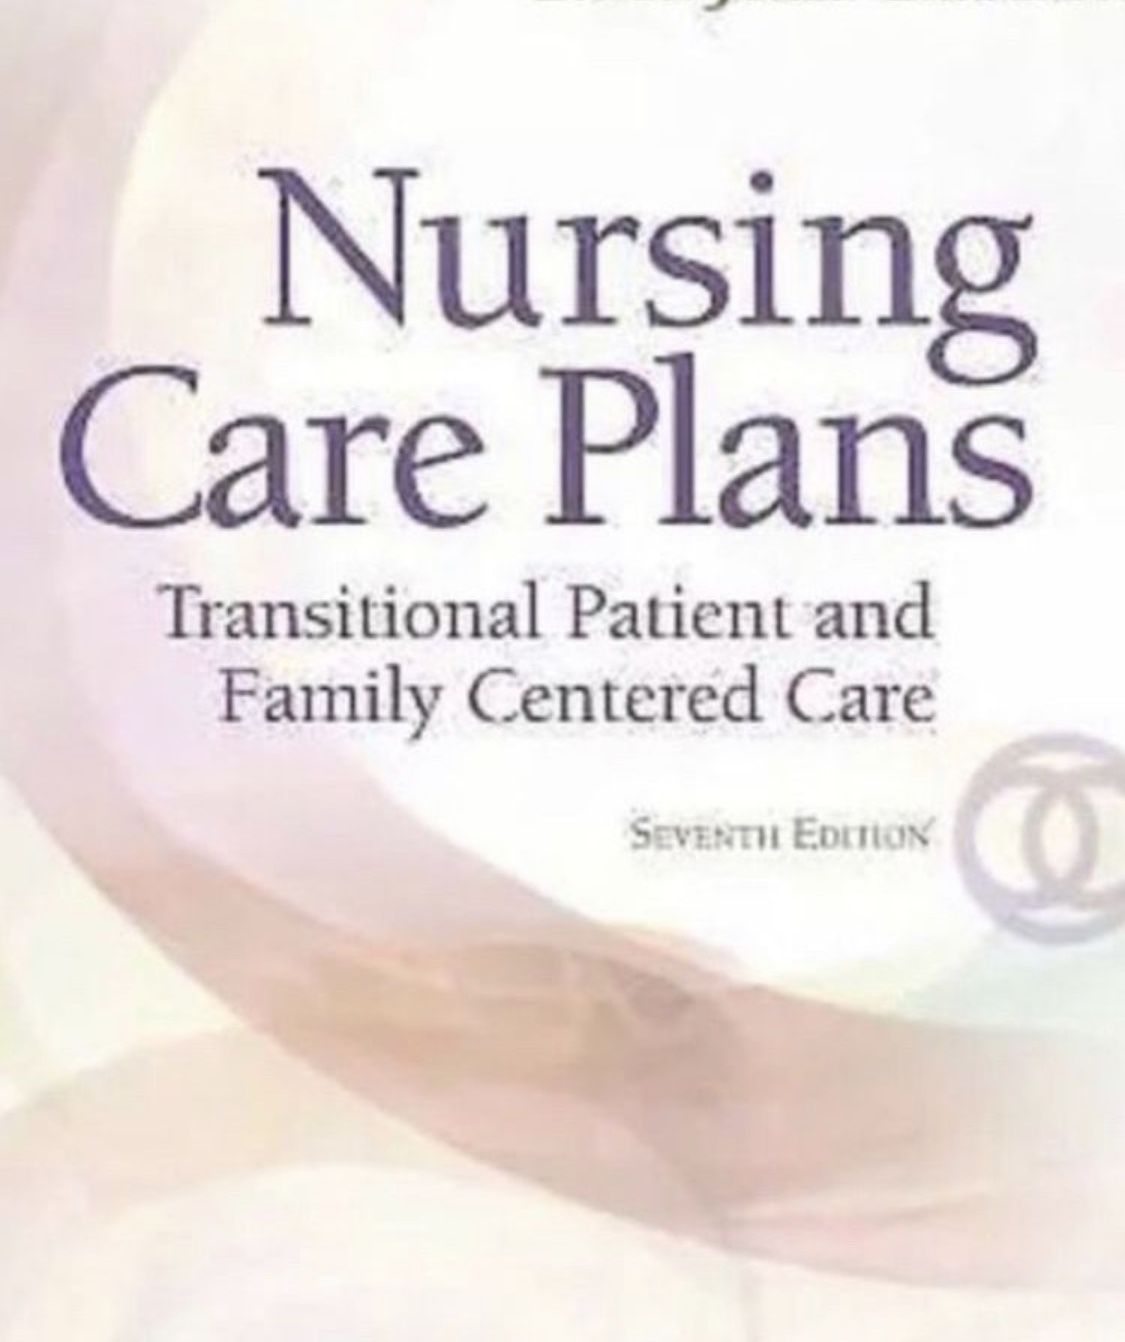 I Nursing Care Plans by Lynda J. Carpenito (2017, Paperback, Revised)